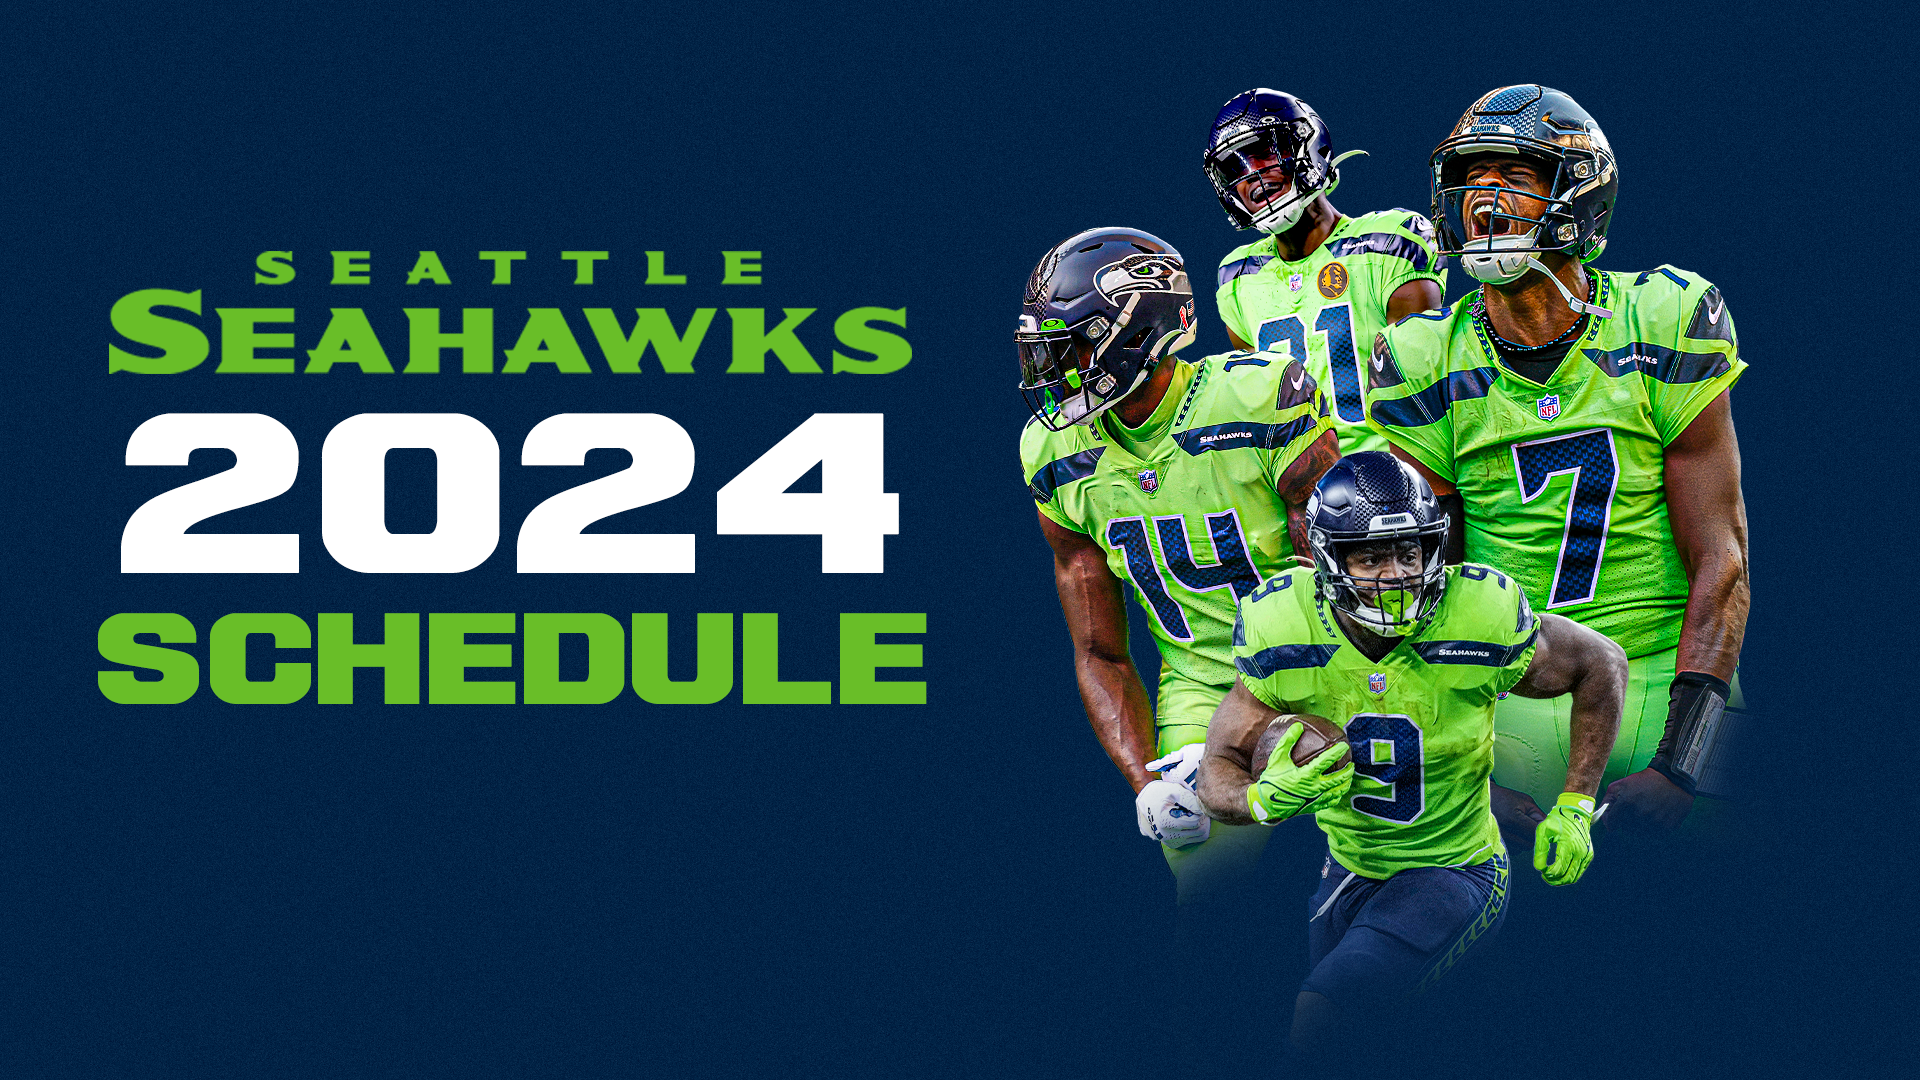 Seattle Seahawks 2024 schedule downloadable wallpapers